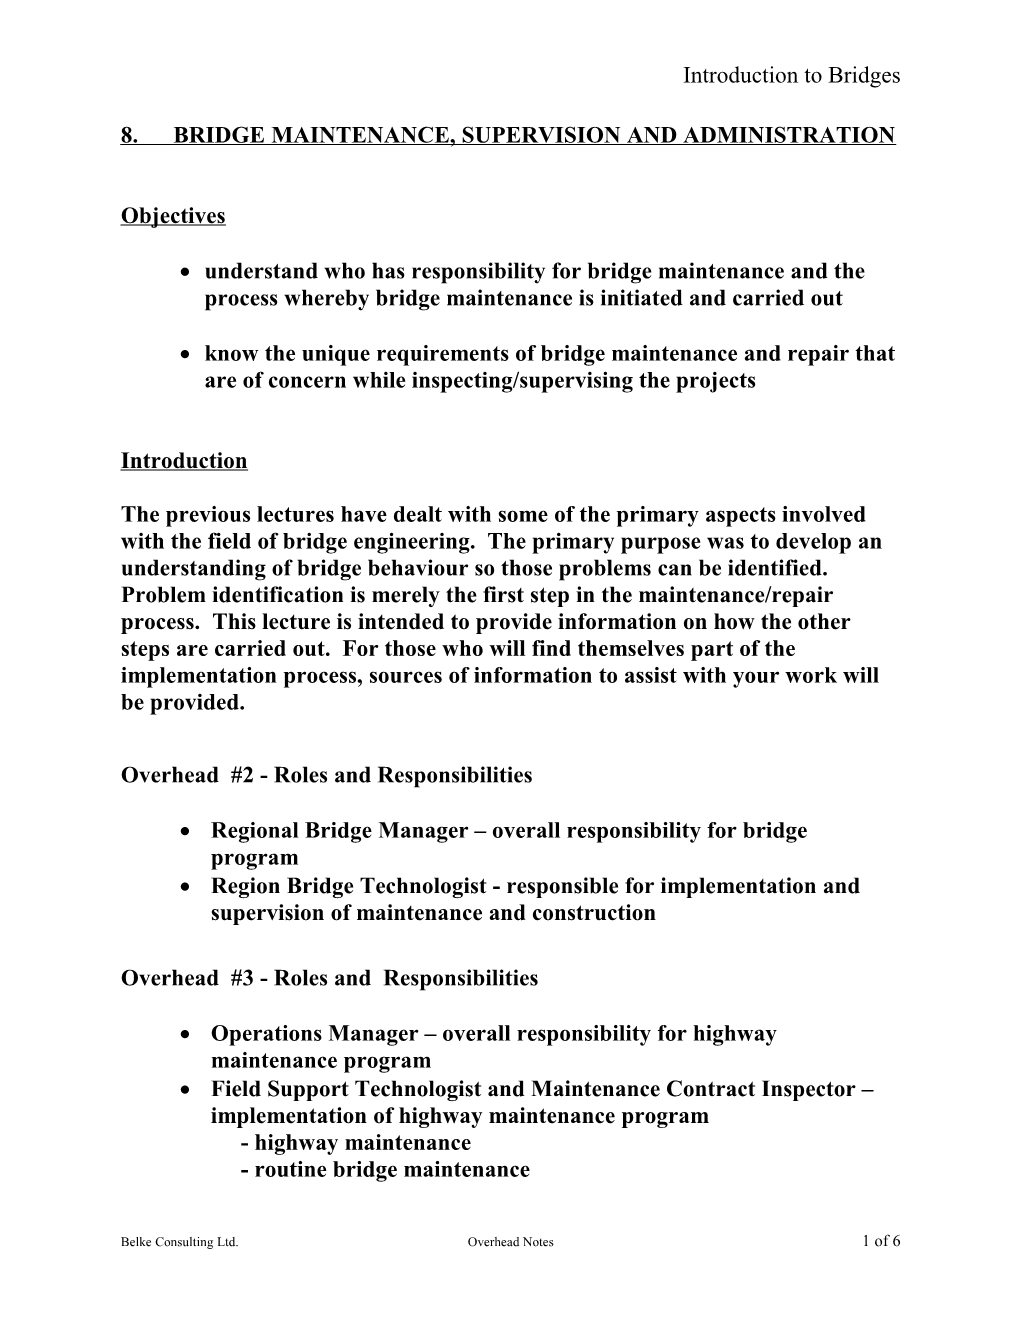 8.Bridge Maintenance, Supervision and Administration